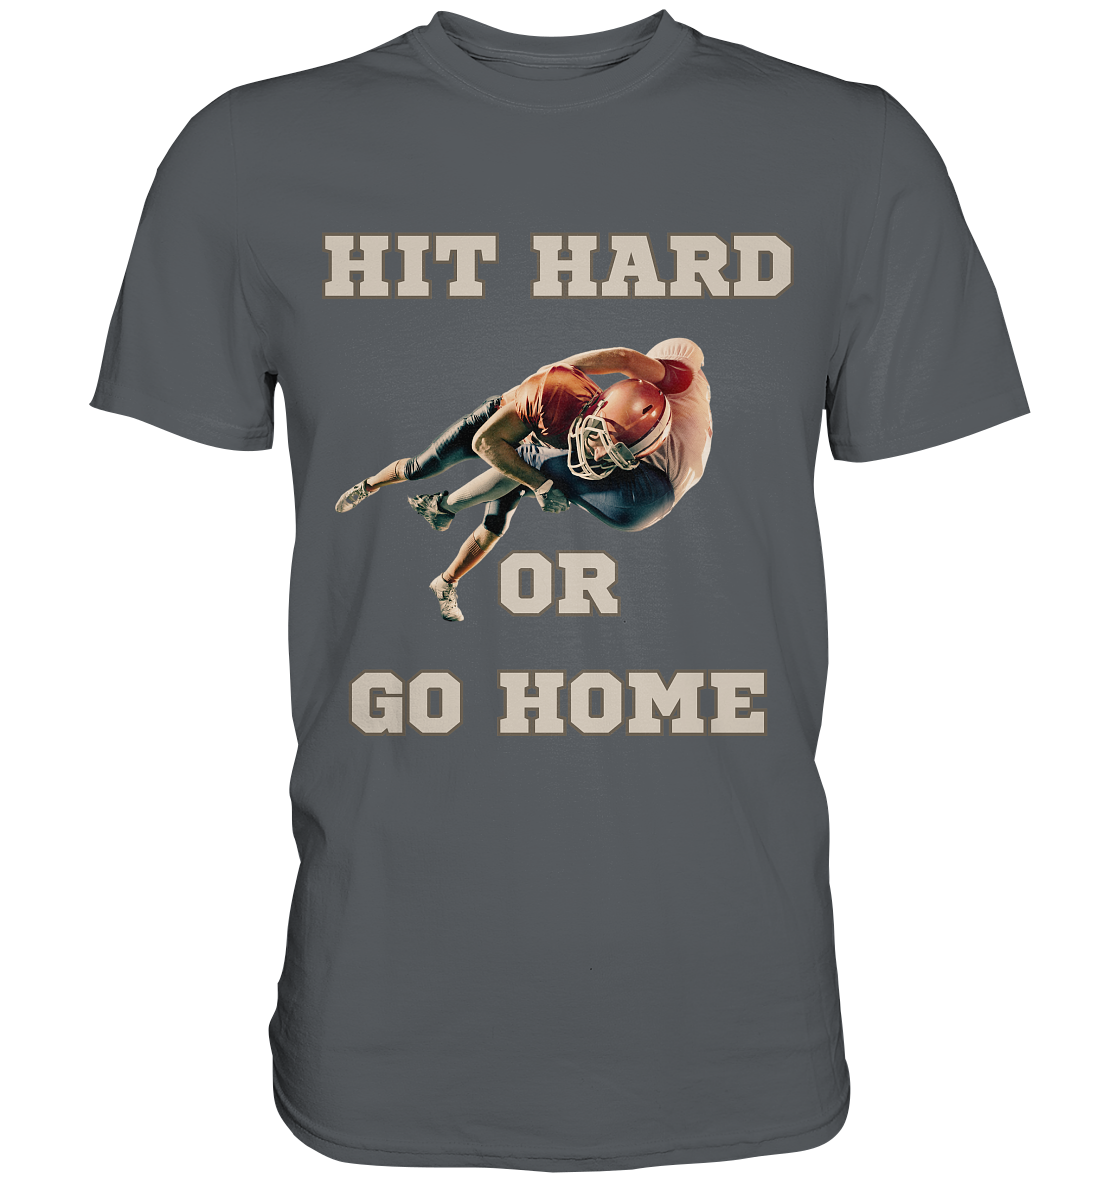 Hit Hard or Go Home - Premium Shirt - Football Unity Football Unity